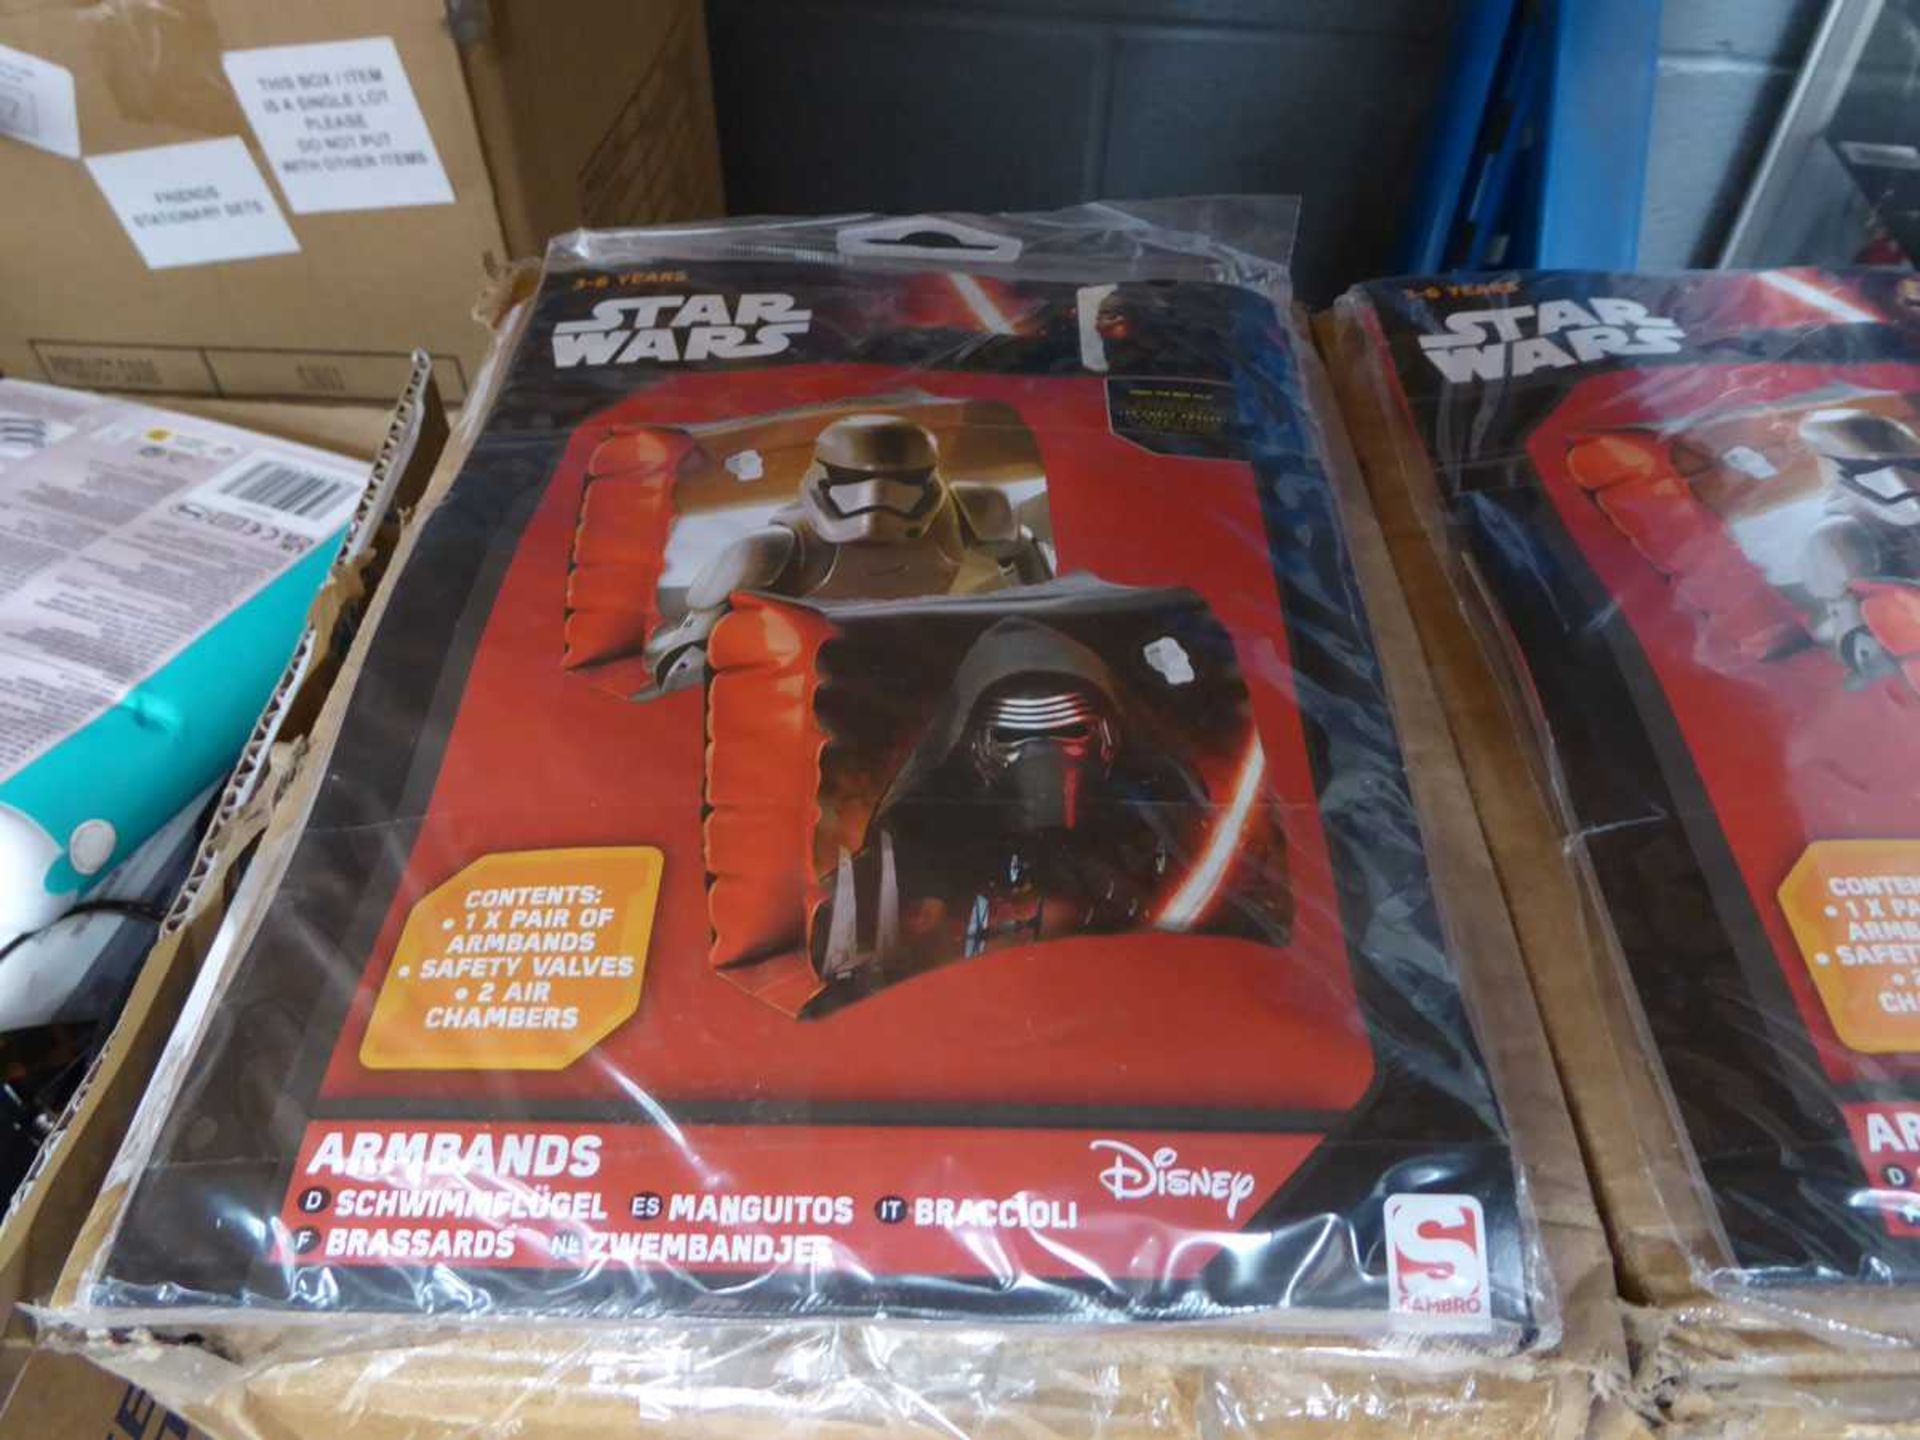 2 Boxes of Star Wars Episode 7 armband sets - Image 2 of 2